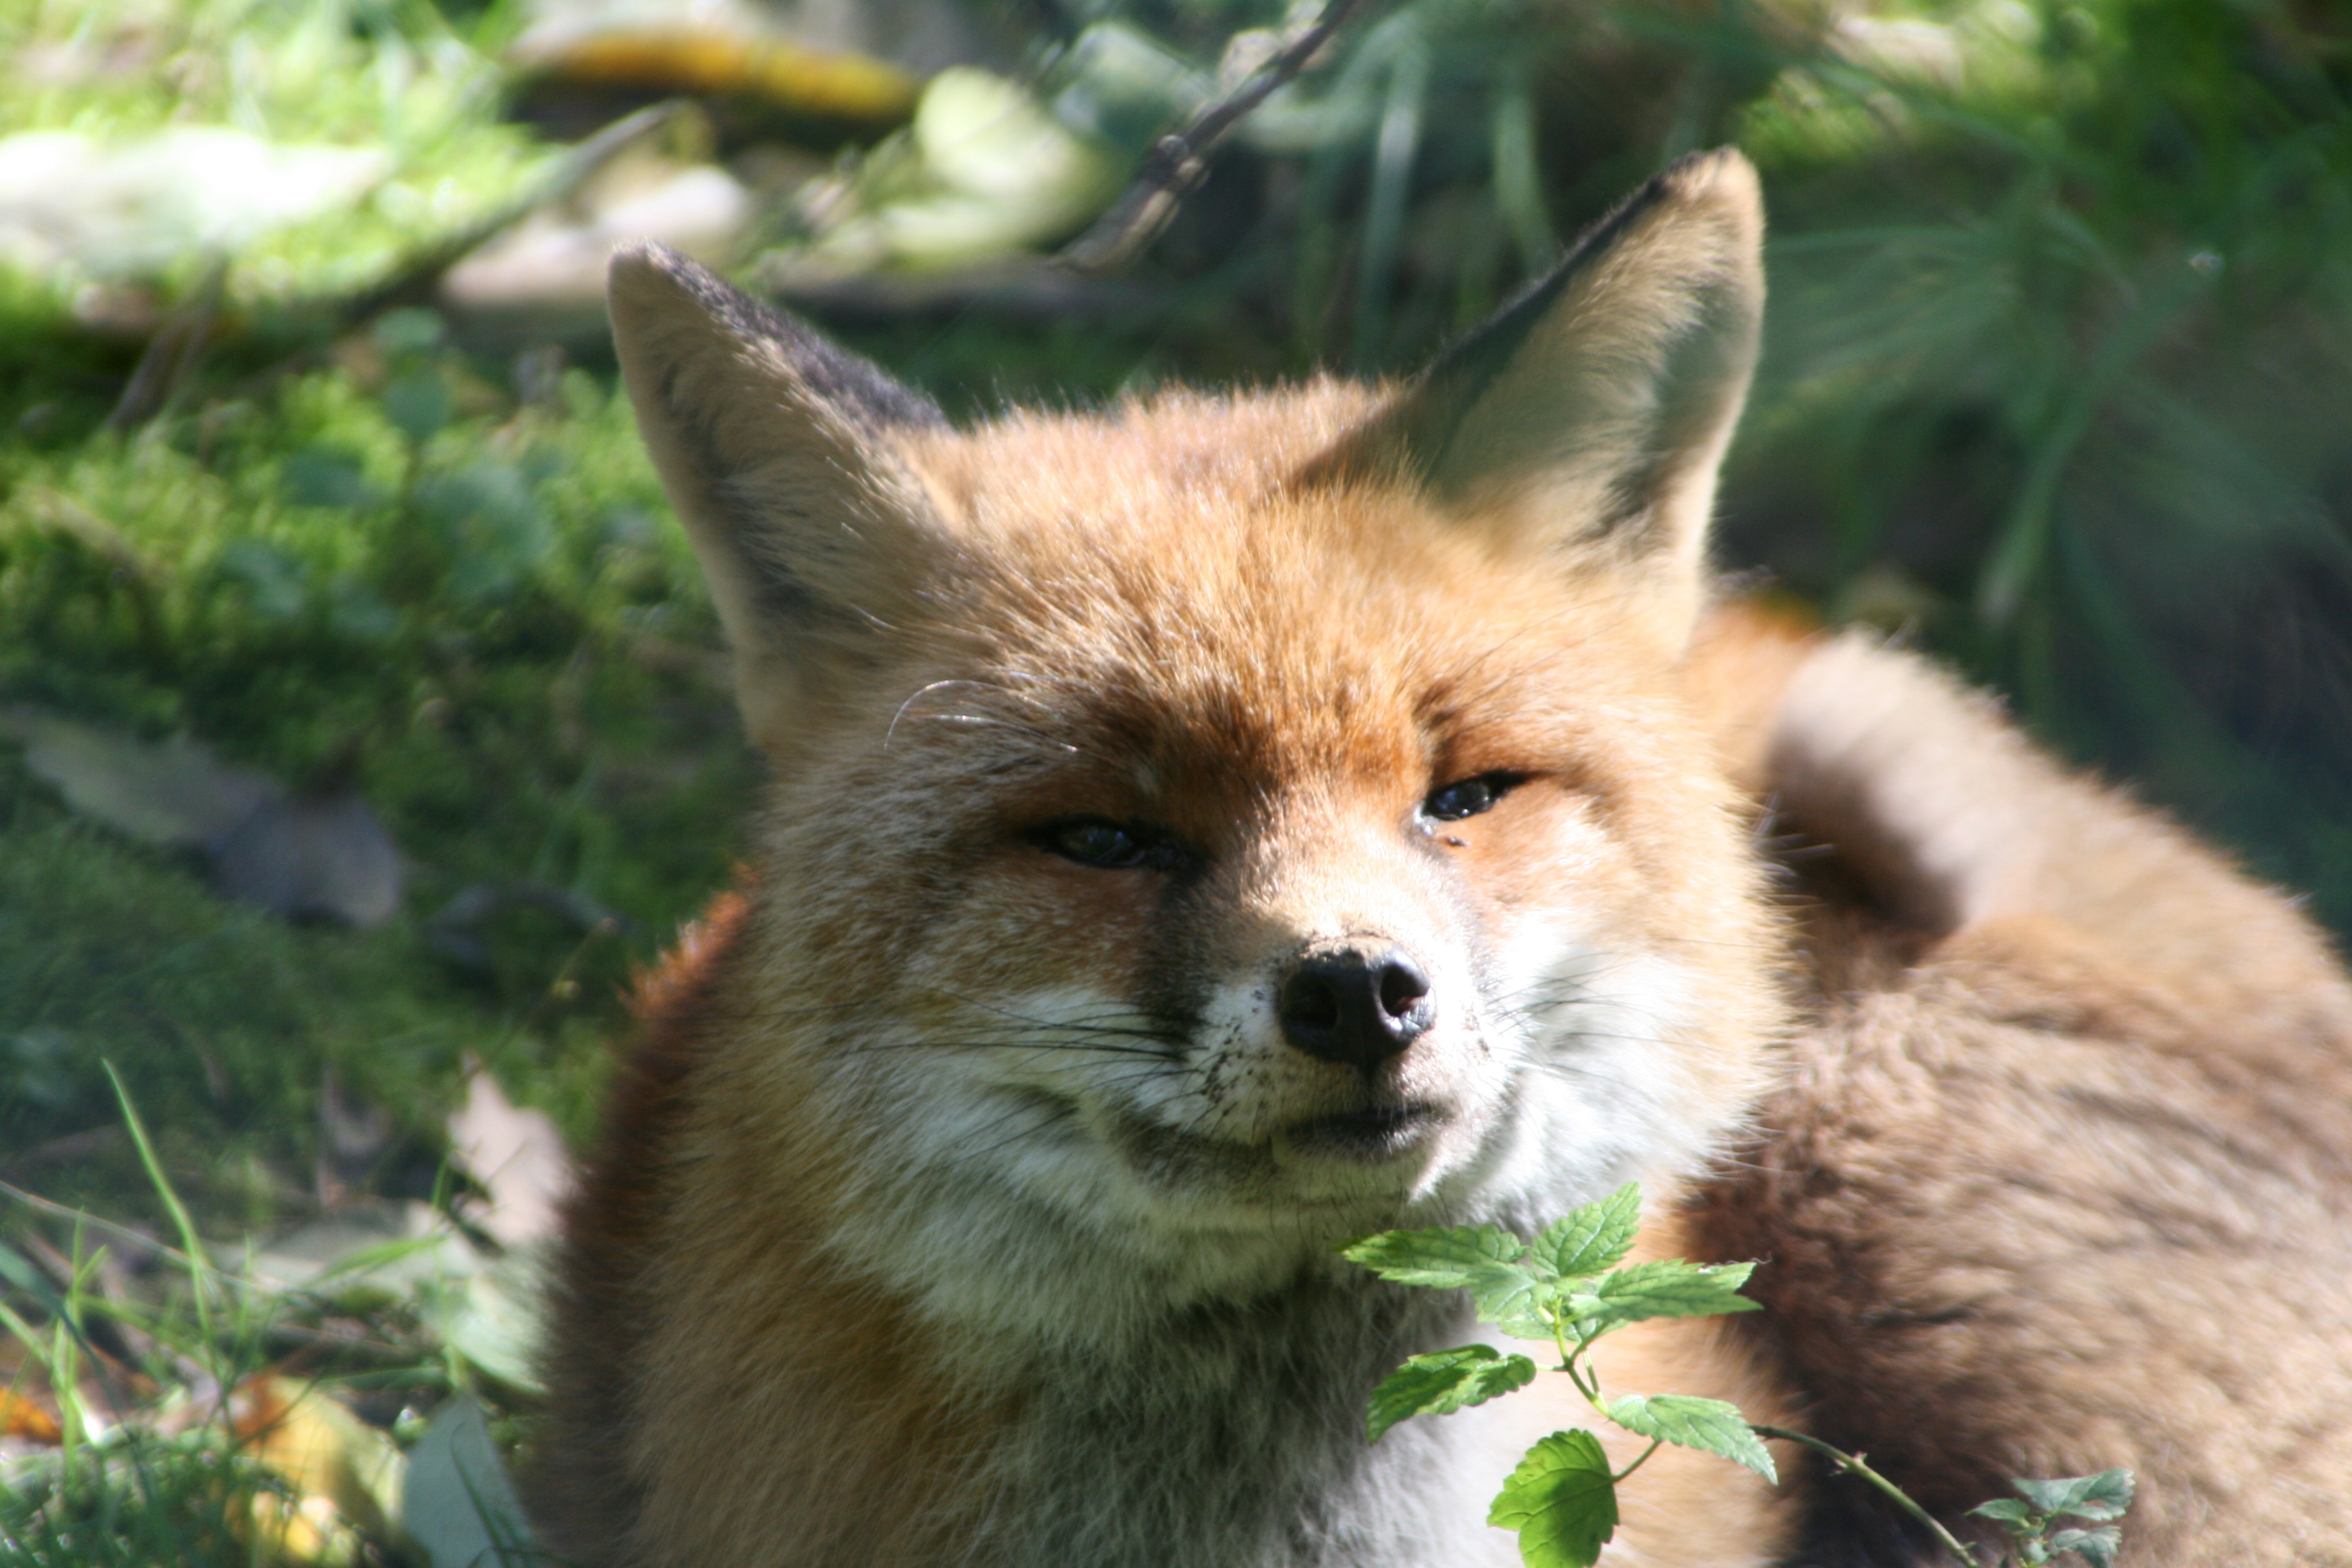 orange fox standing near plants during daytime